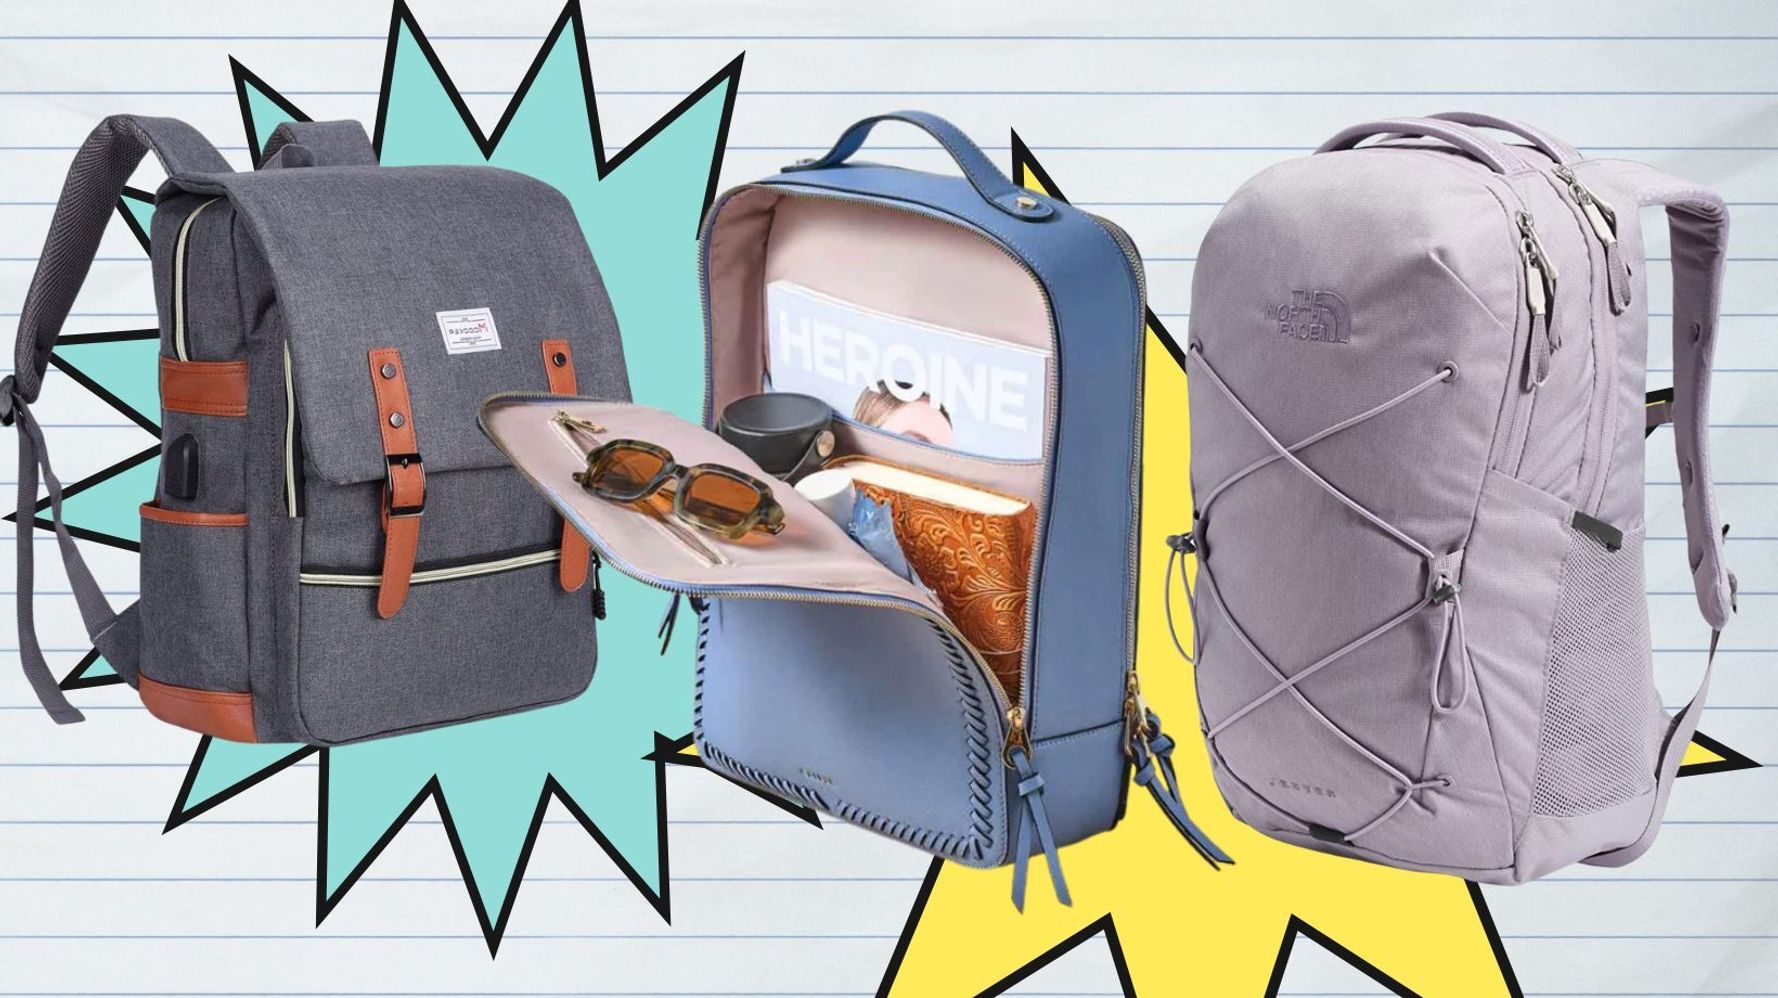 Dagne Dover Dakota Backpack Review: a Great Bag for Work